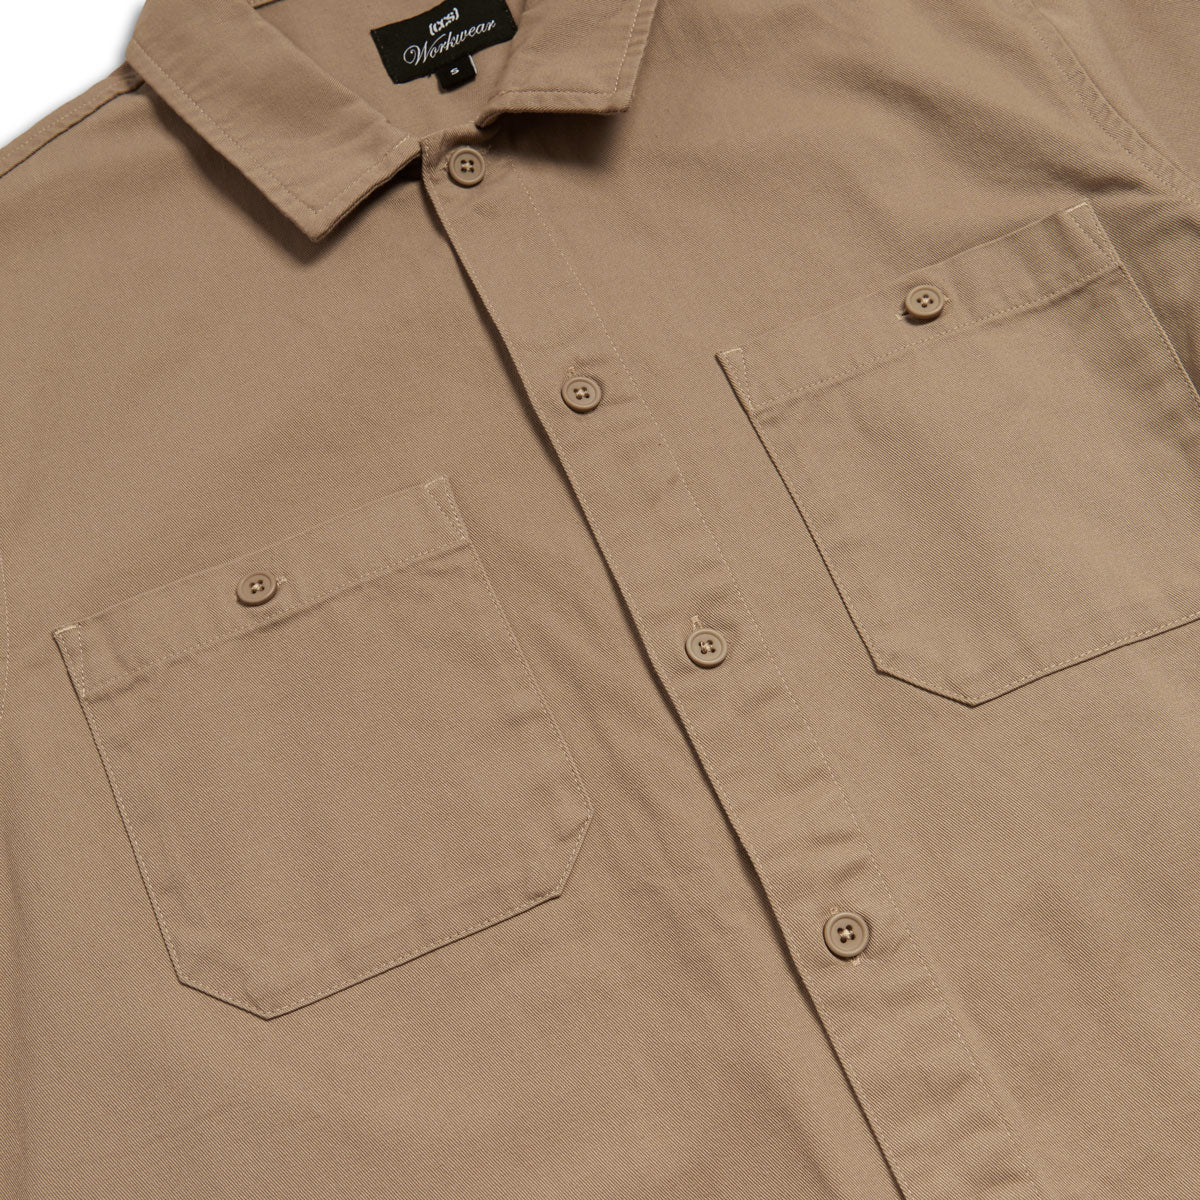 CCS Custom Embroidered Work Shirt - Khaki image 5